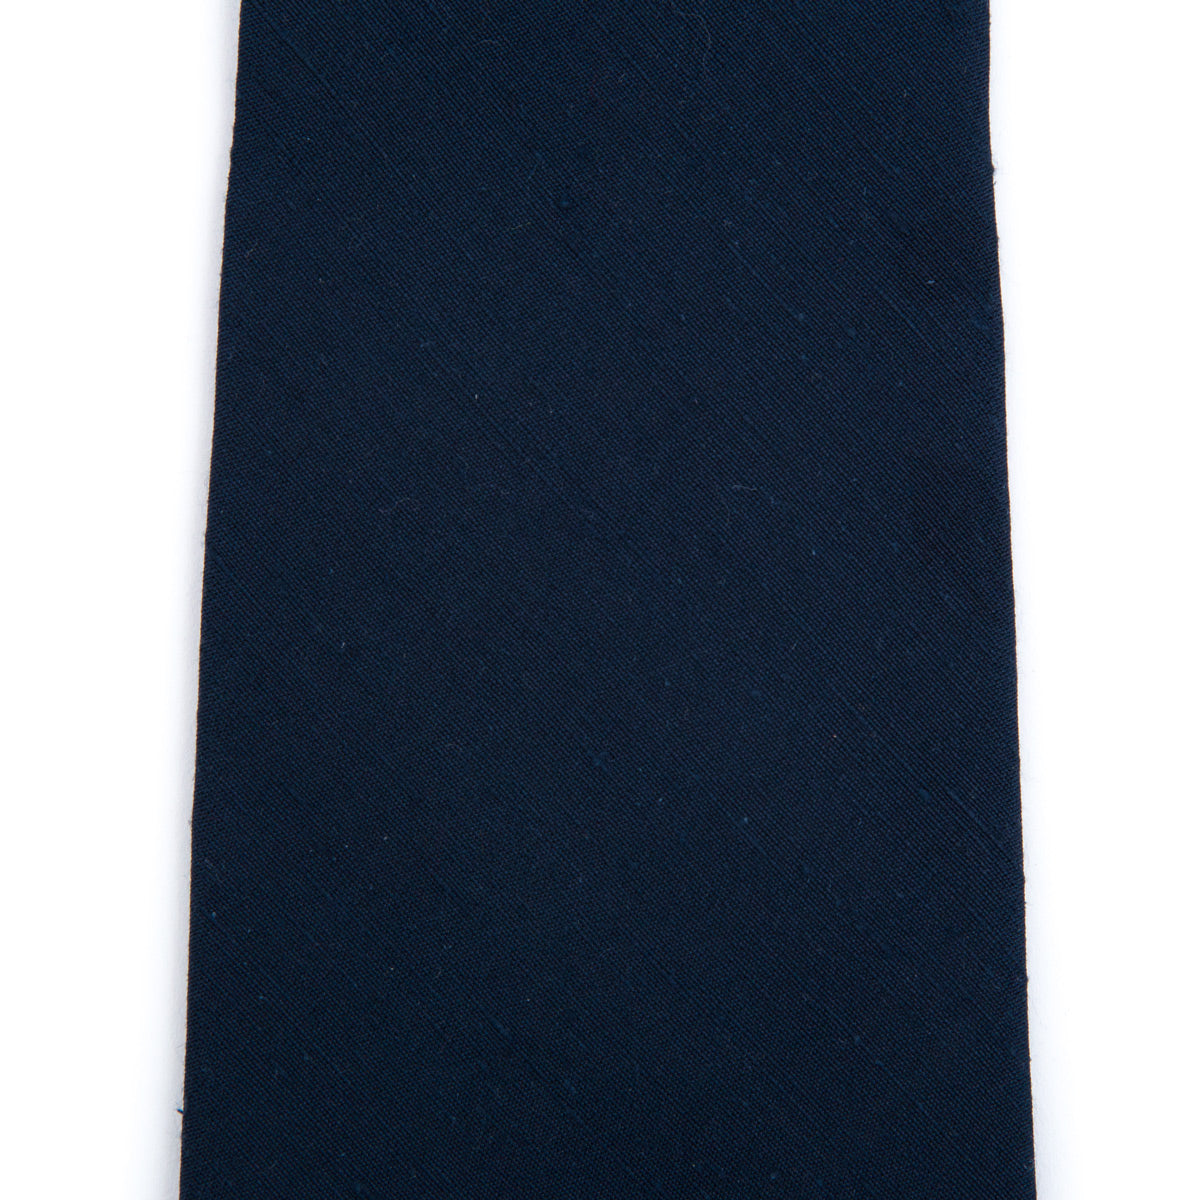 Aegean blue plain tie